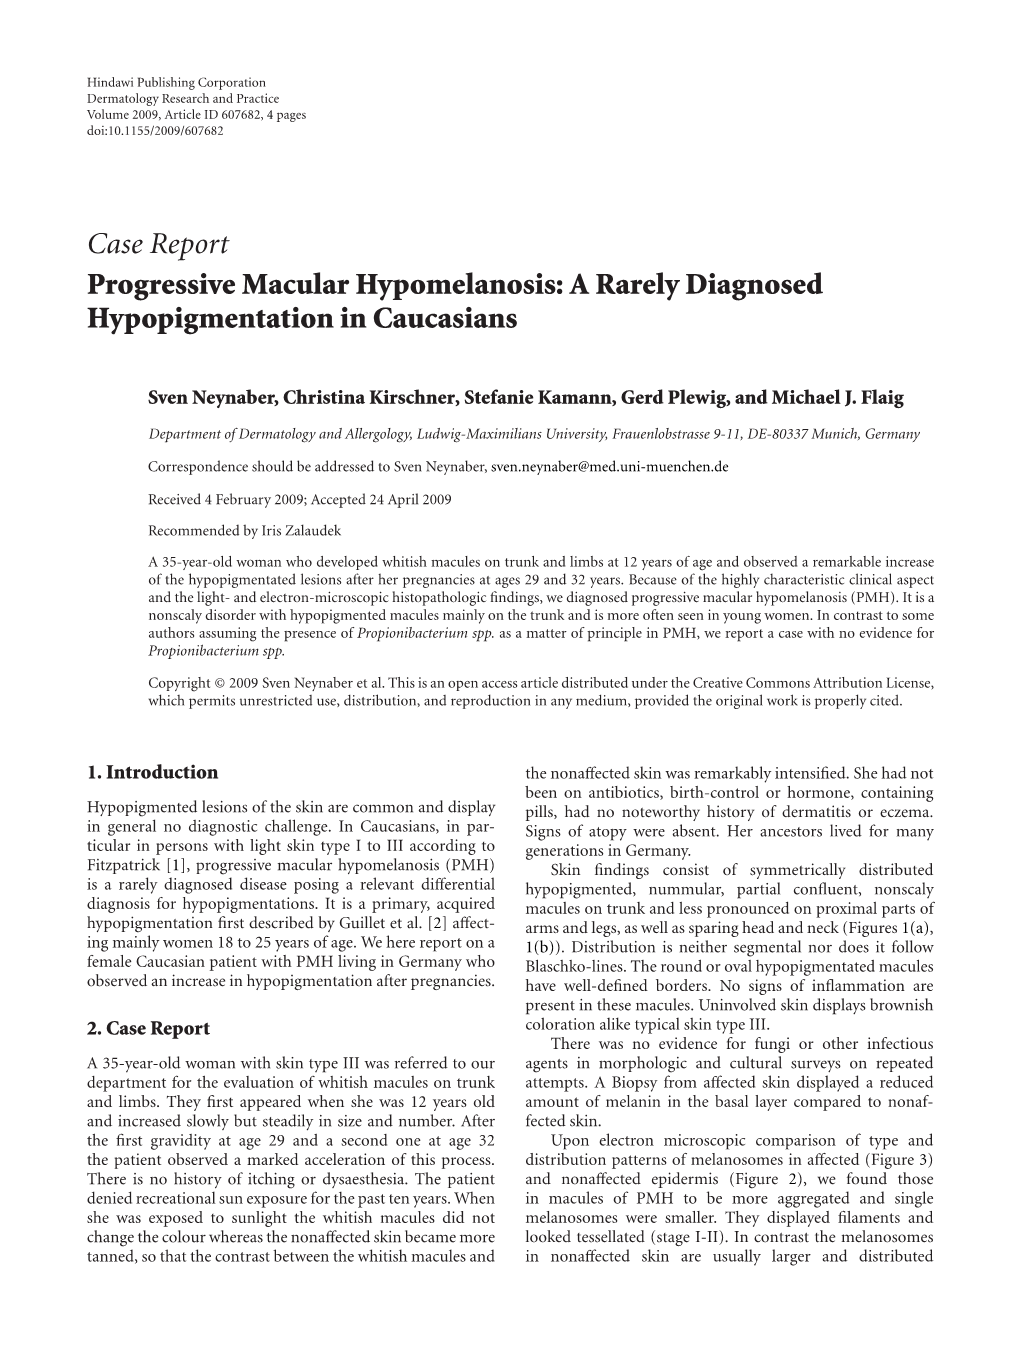 Case Report Progressive Macular Hypomelanosis: a Rarely Diagnosed Hypopigmentation in Caucasians